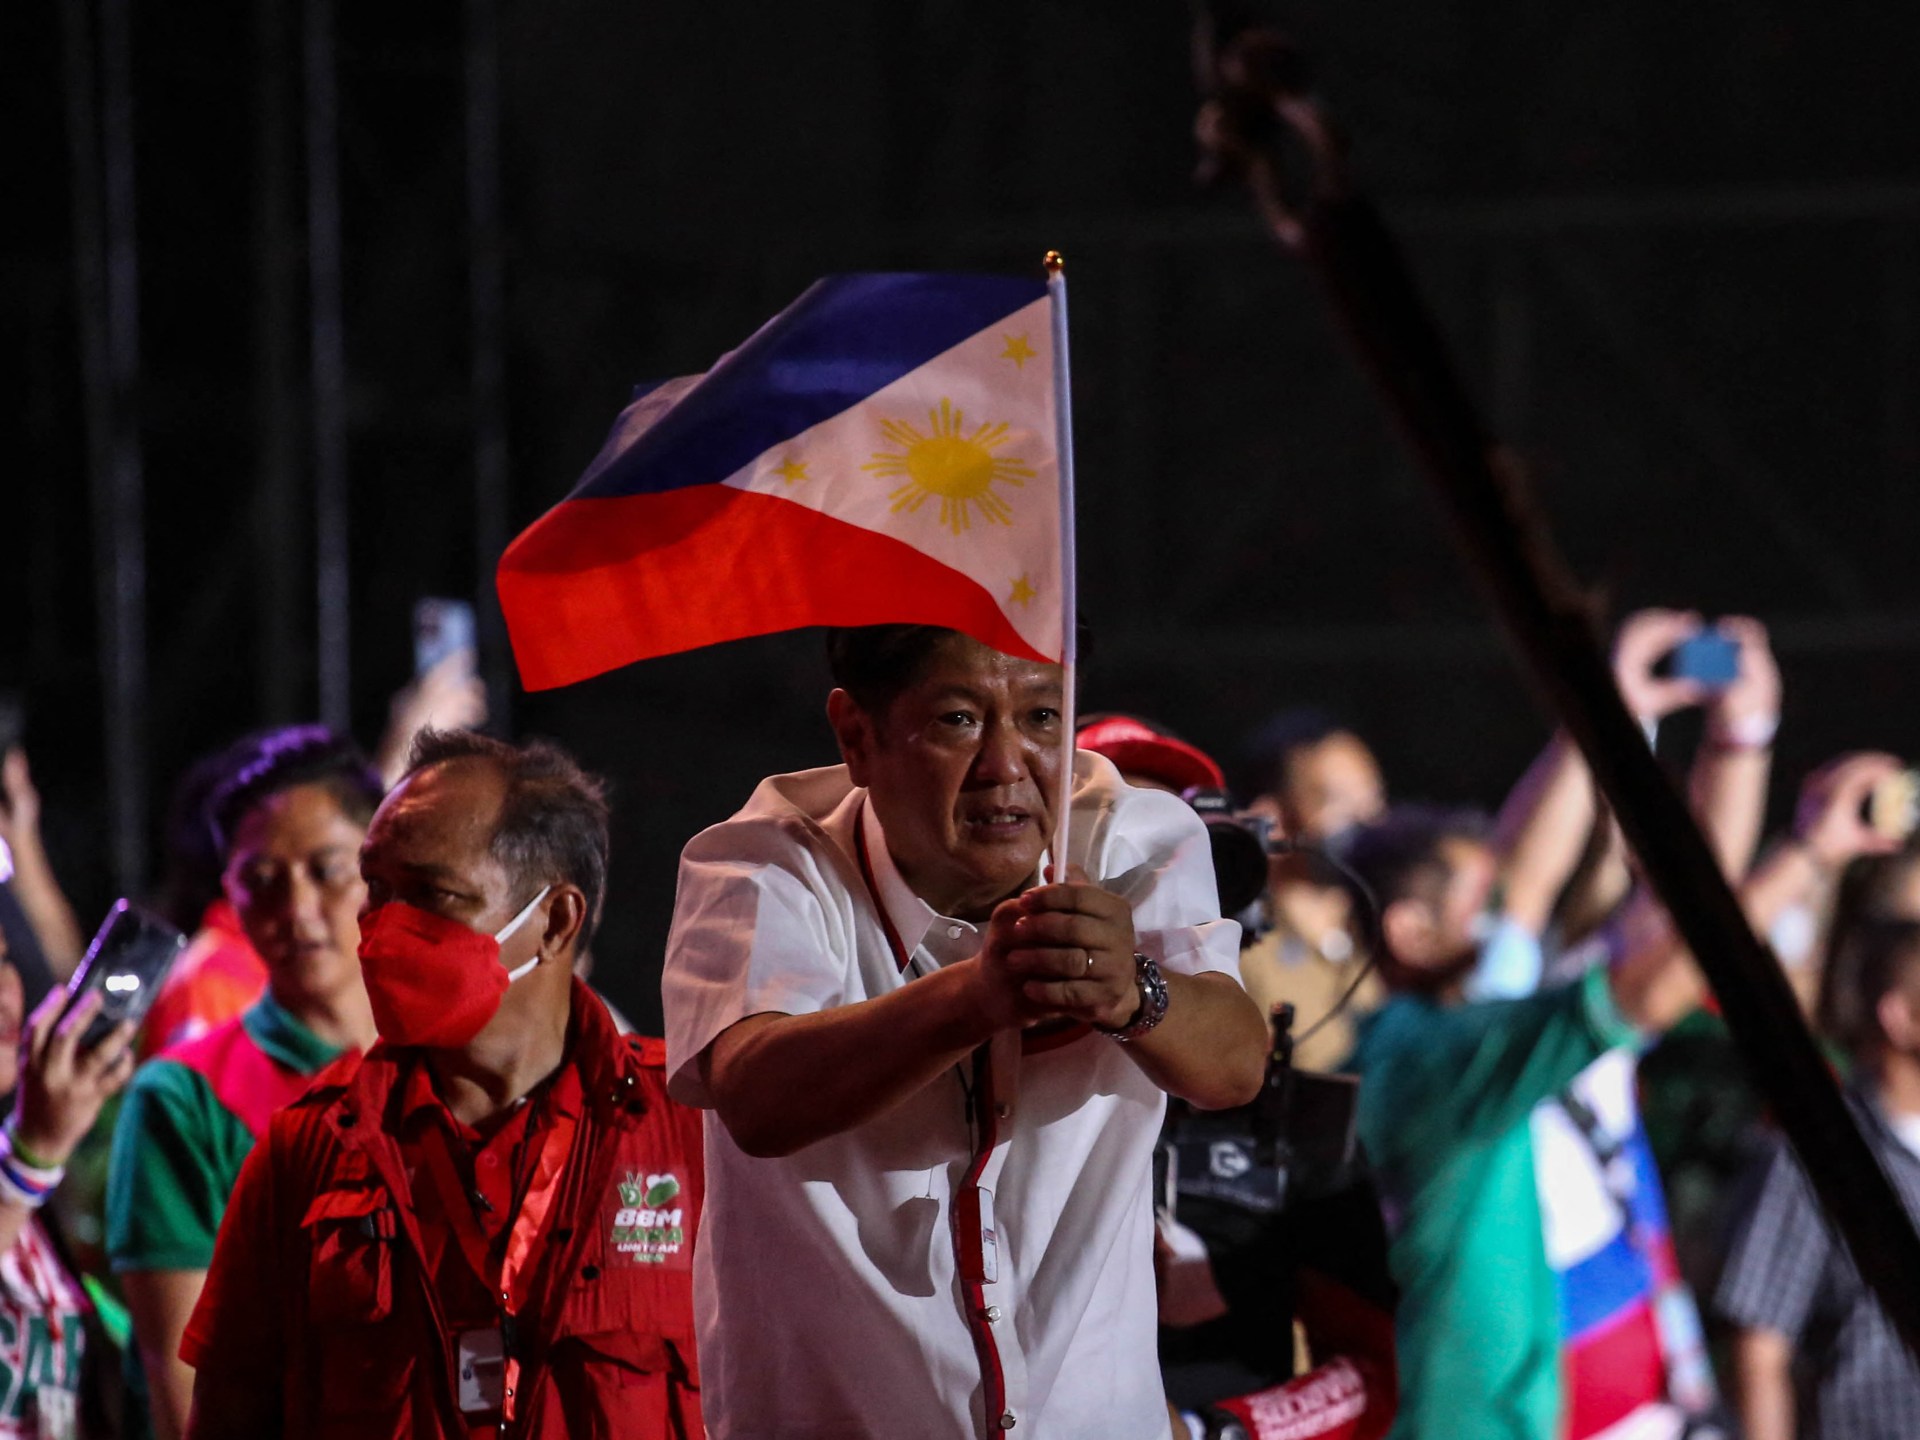 Expected to win. Маркос диктатор Филиппин. Выборы на Филиппинах 2022. Клана Маркосов Филиппины.